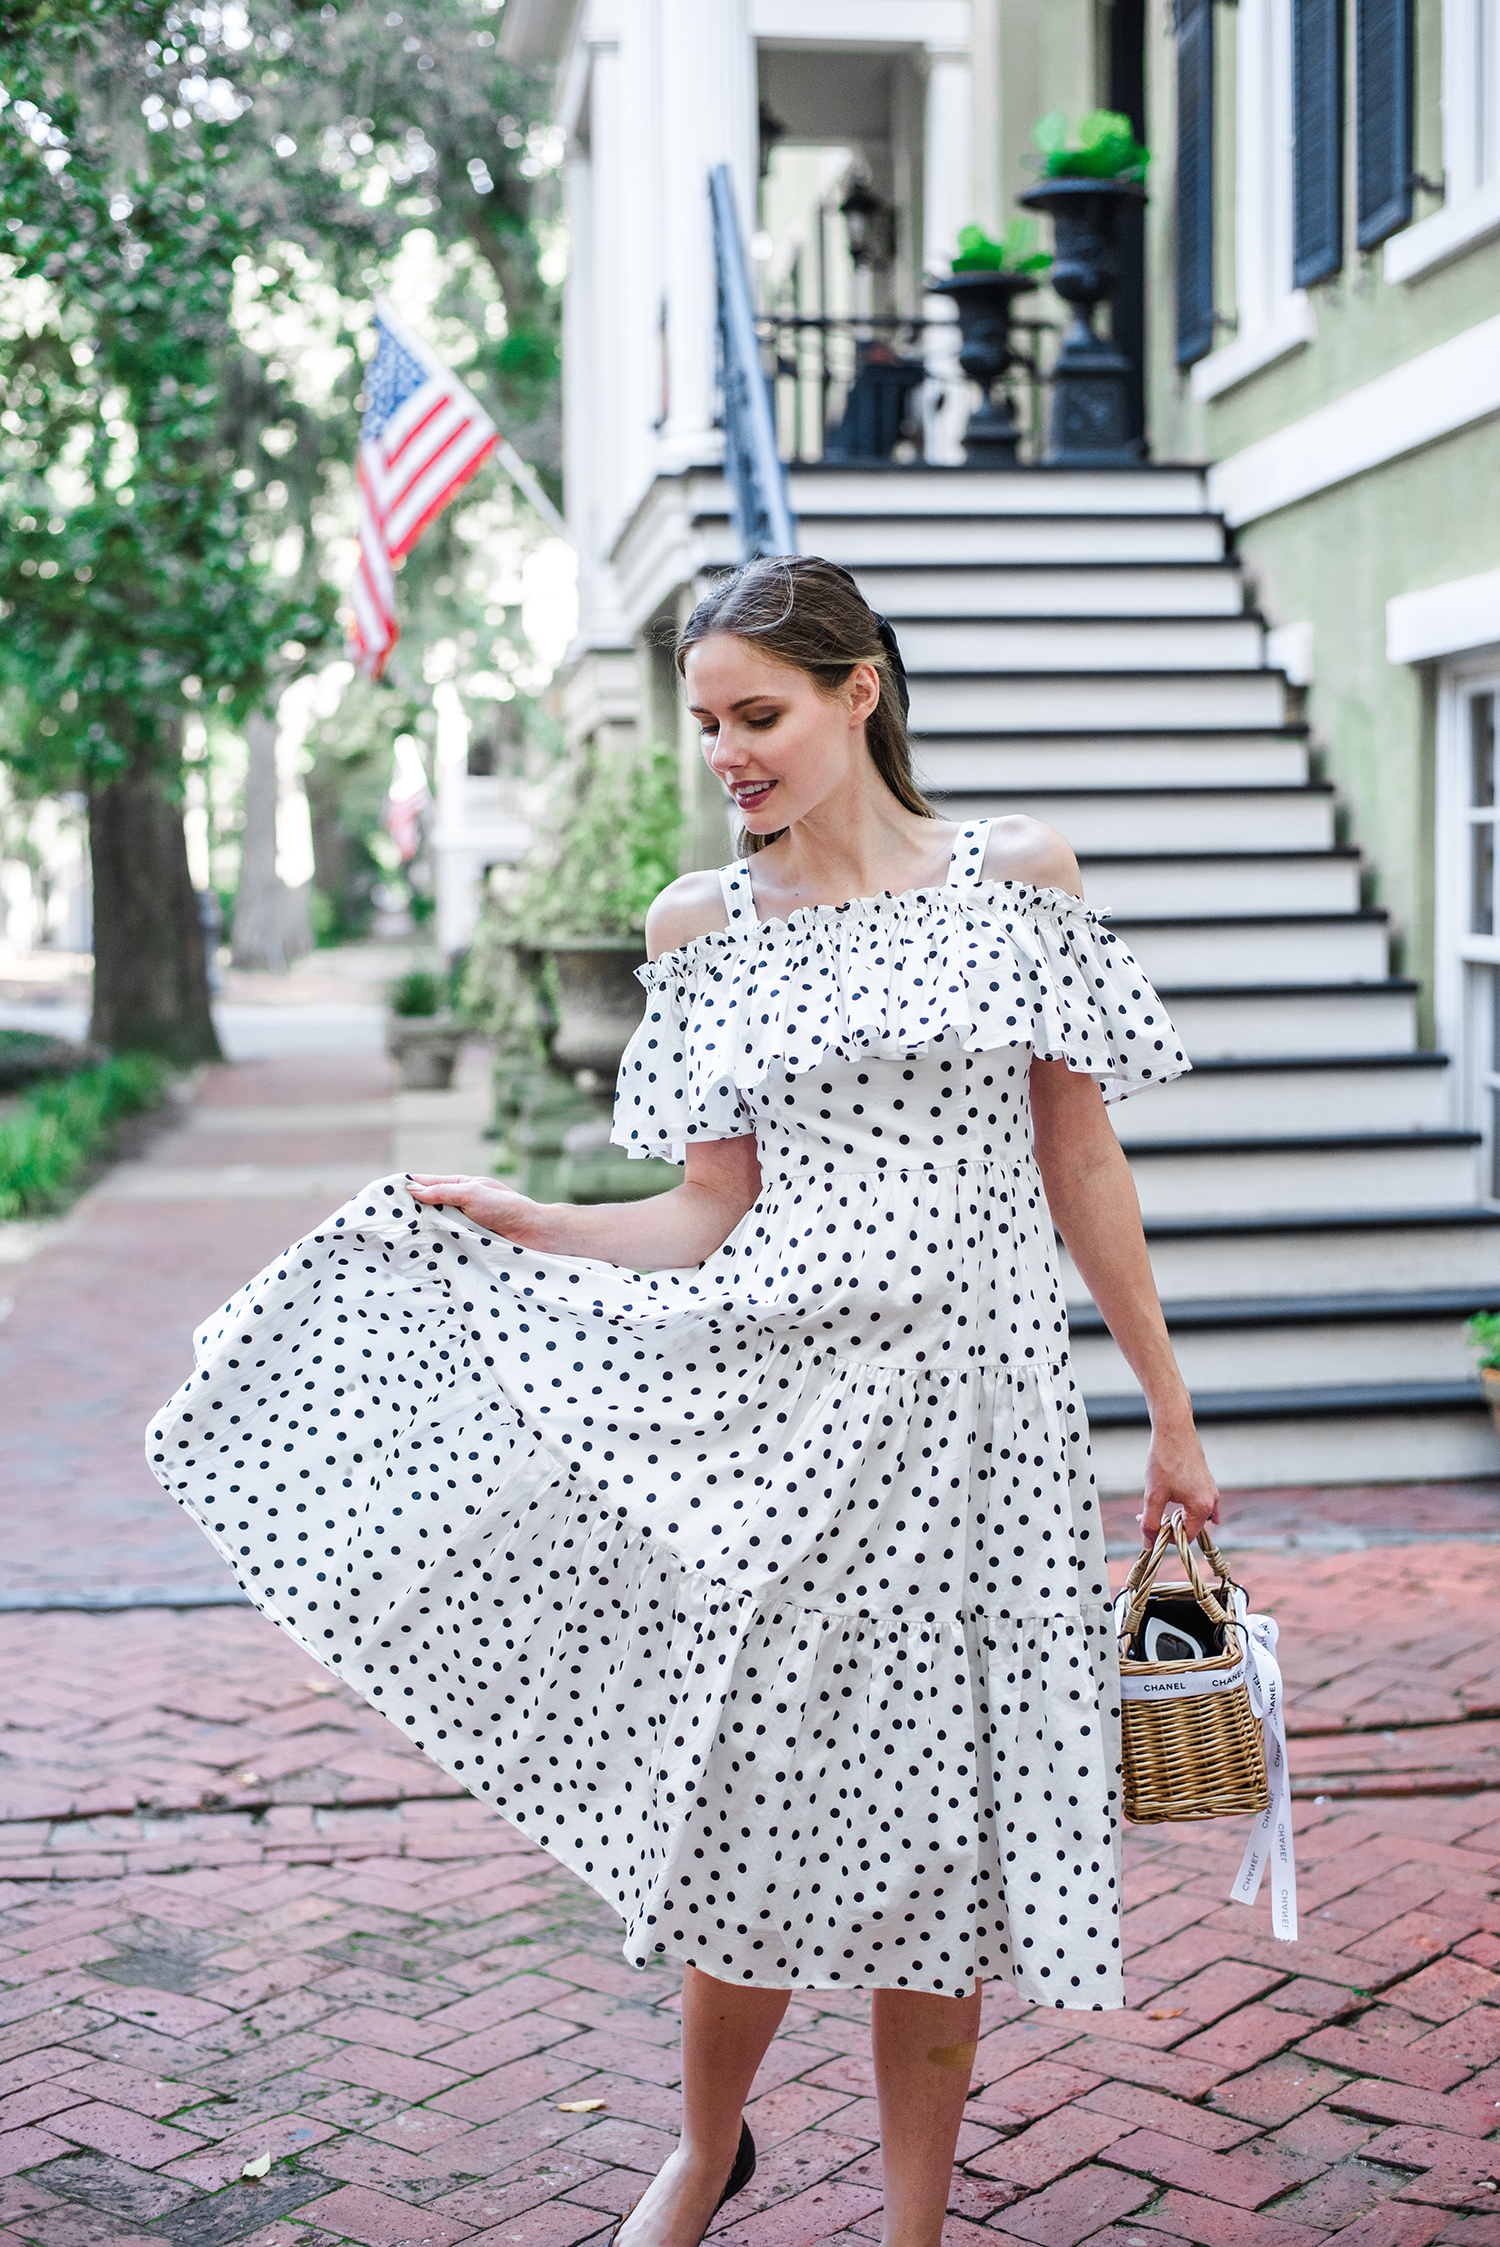 Alyssa Campanella of The A List blog visits Savannah, Georgia wearing Stylekeepers Girl Next Door polka dot dress